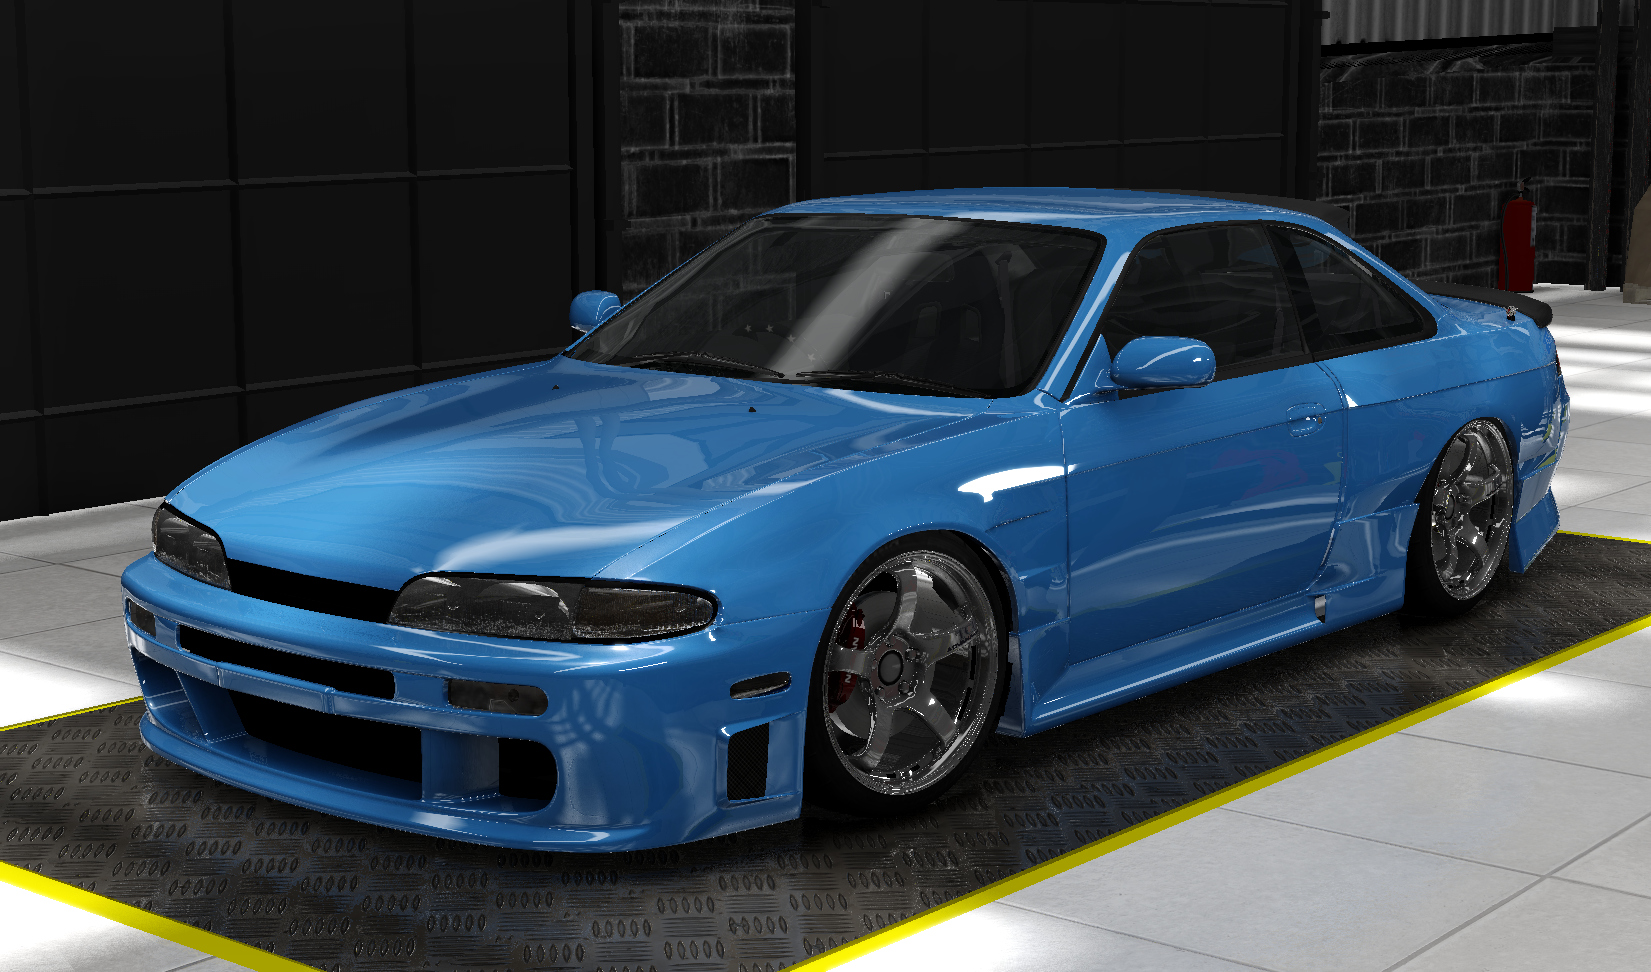 Nissan Silvia S14 VQ35DE, skin hyper blue